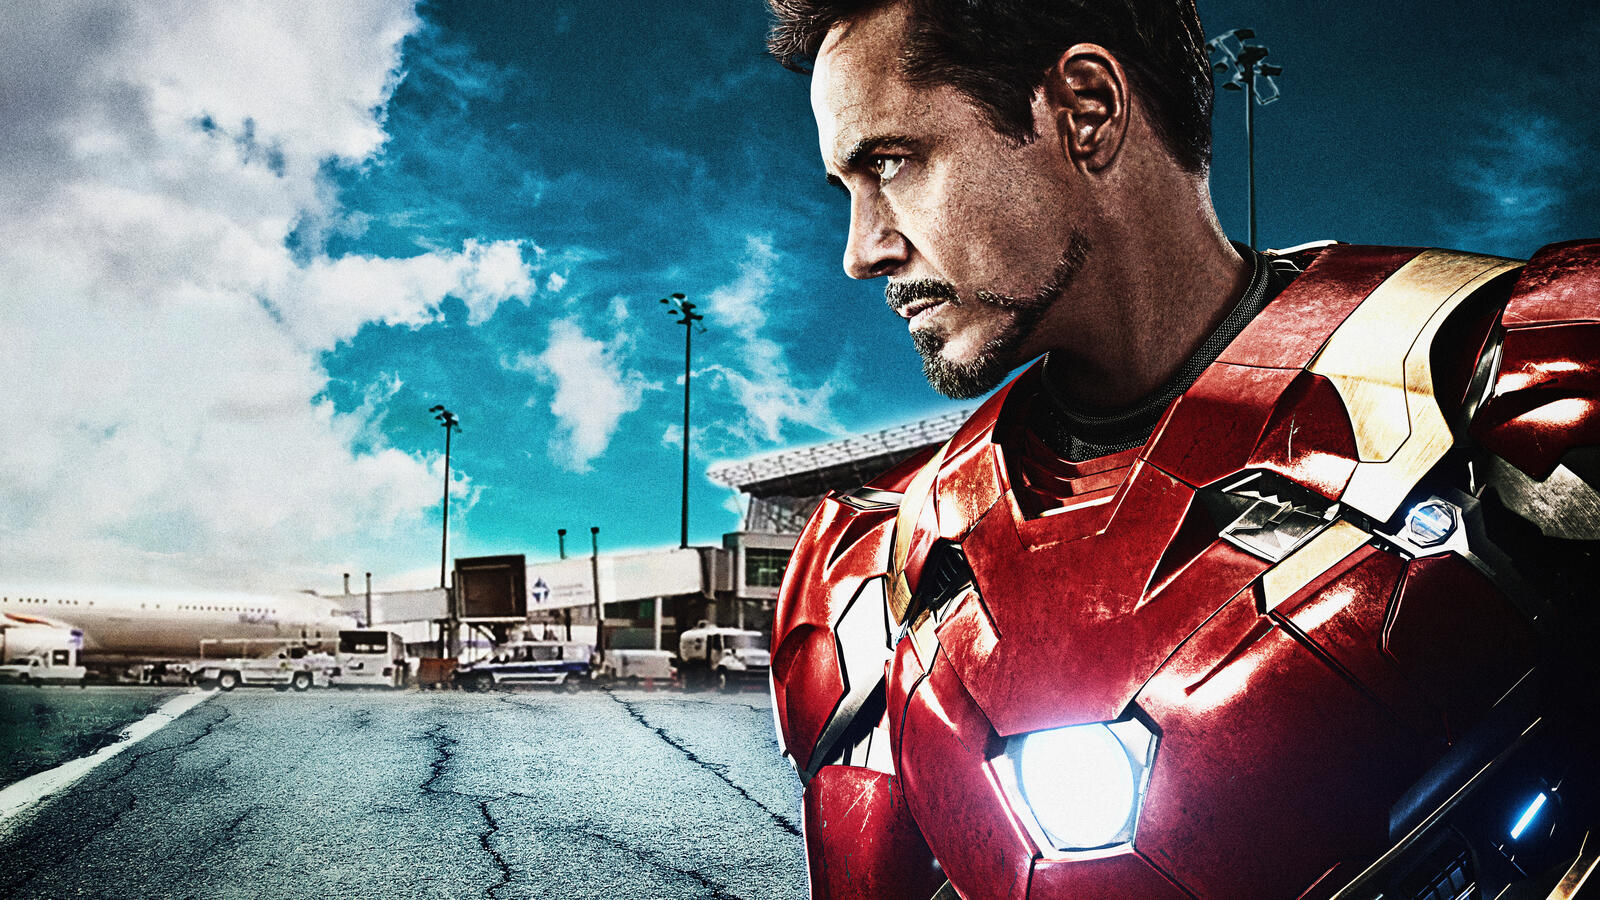 Wallpapers Iron Man captain america civil war movies on the desktop